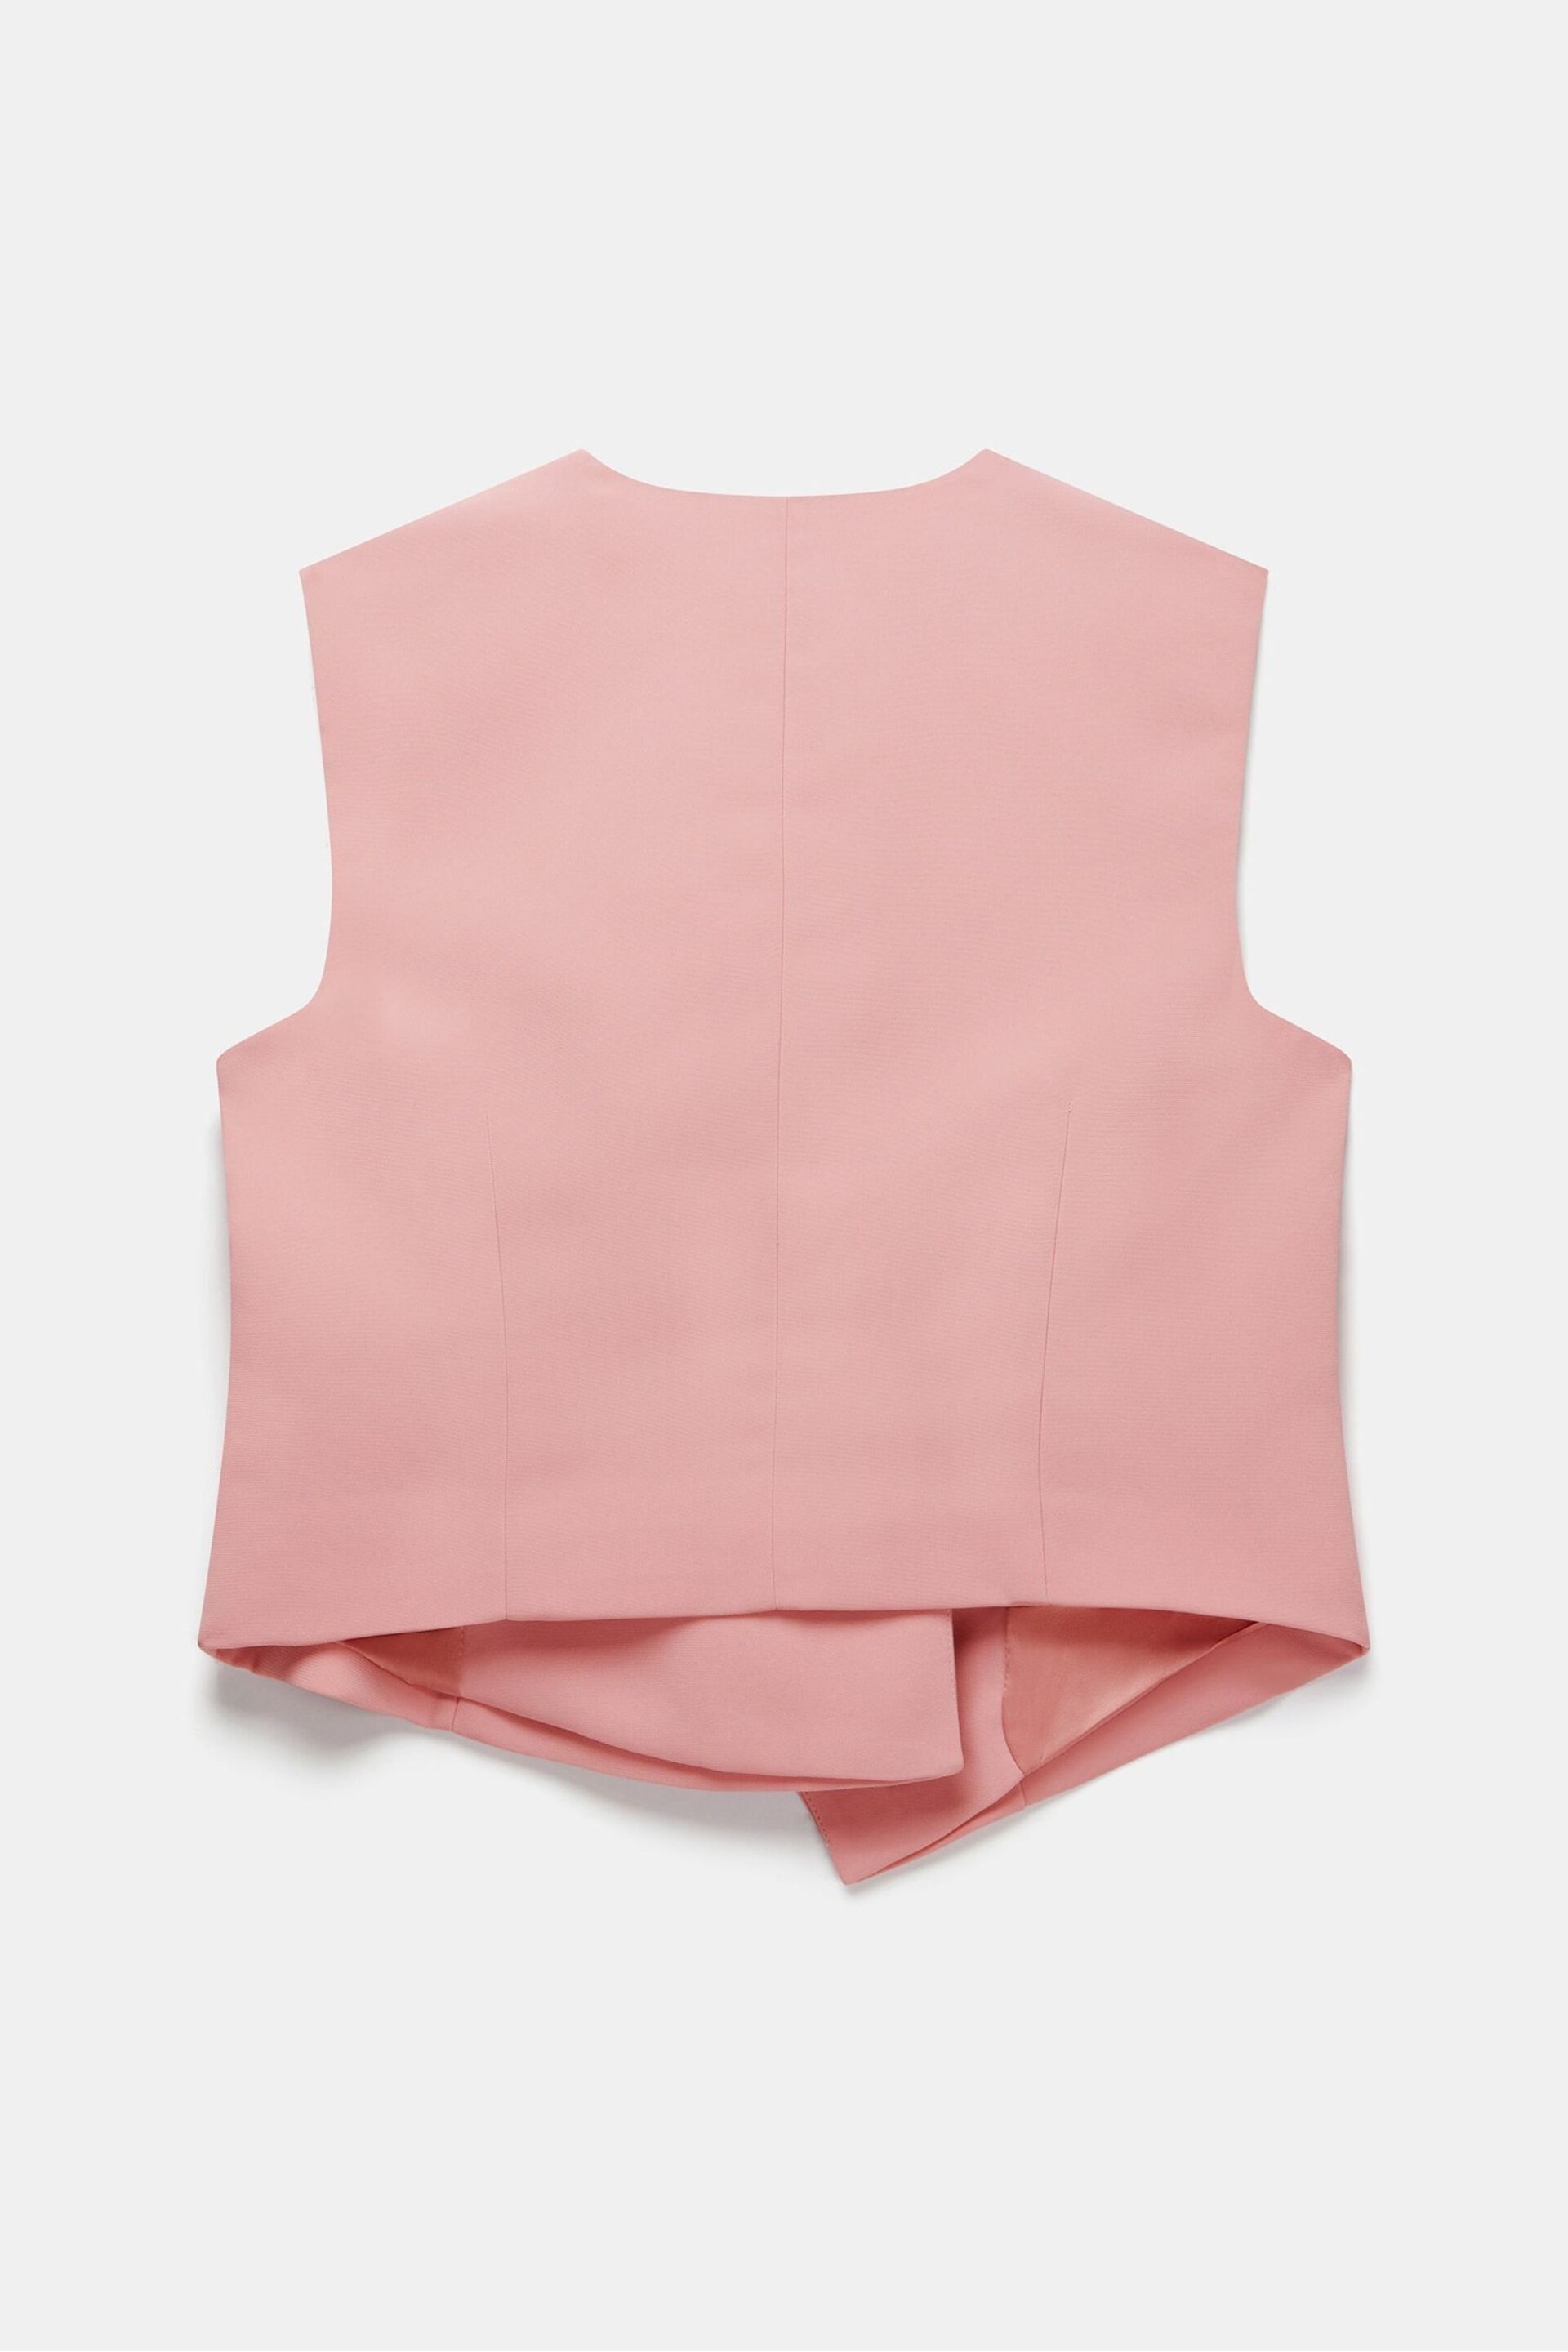 Mint Velvet Pink Asymmetric Waistcoat - Image 4 of 4